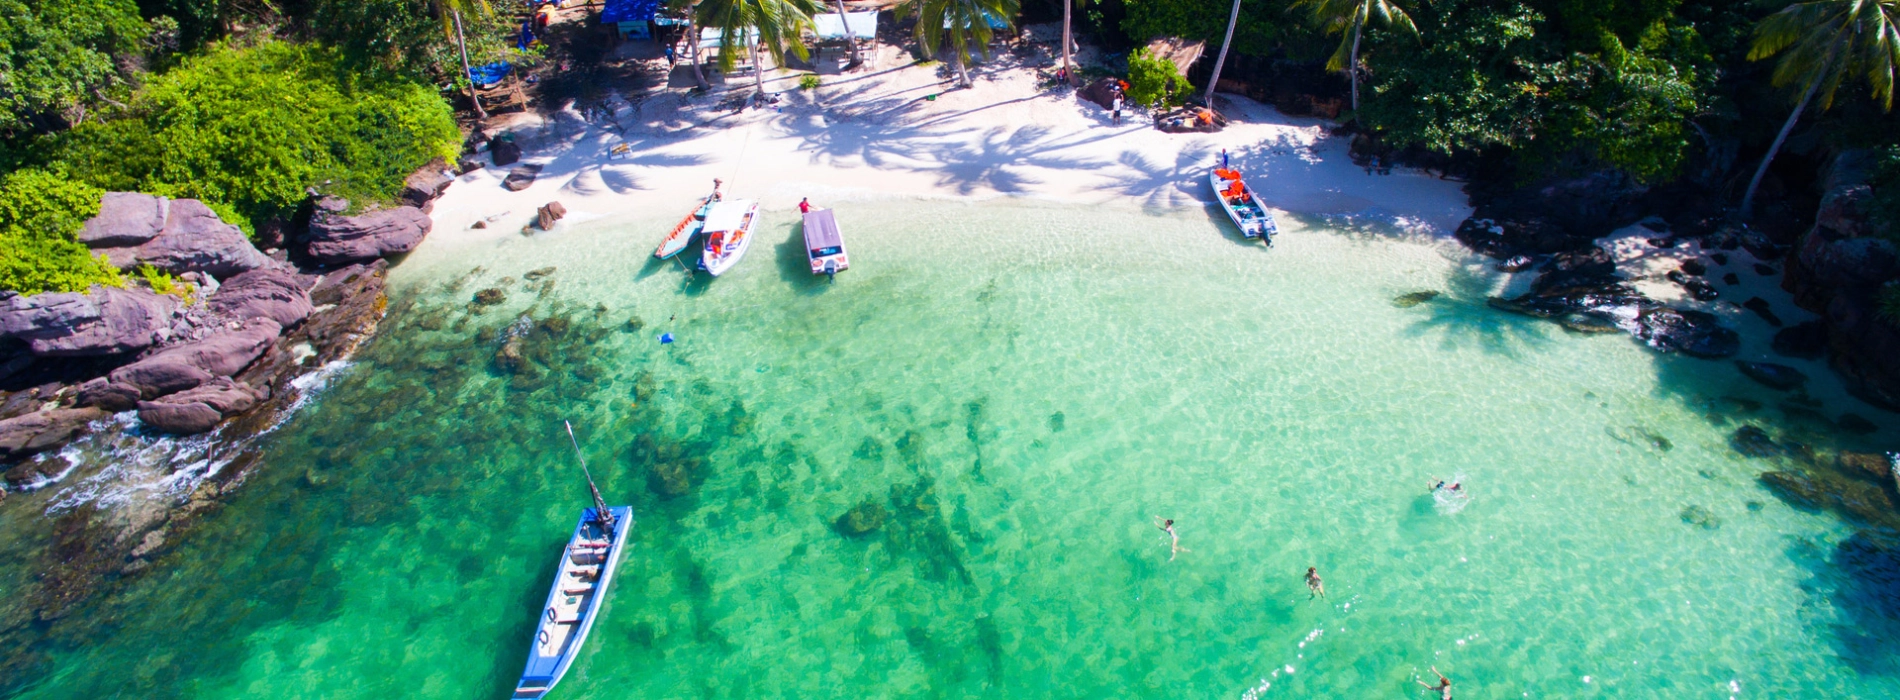 Top 5 most beautiful beaches in Vietnam